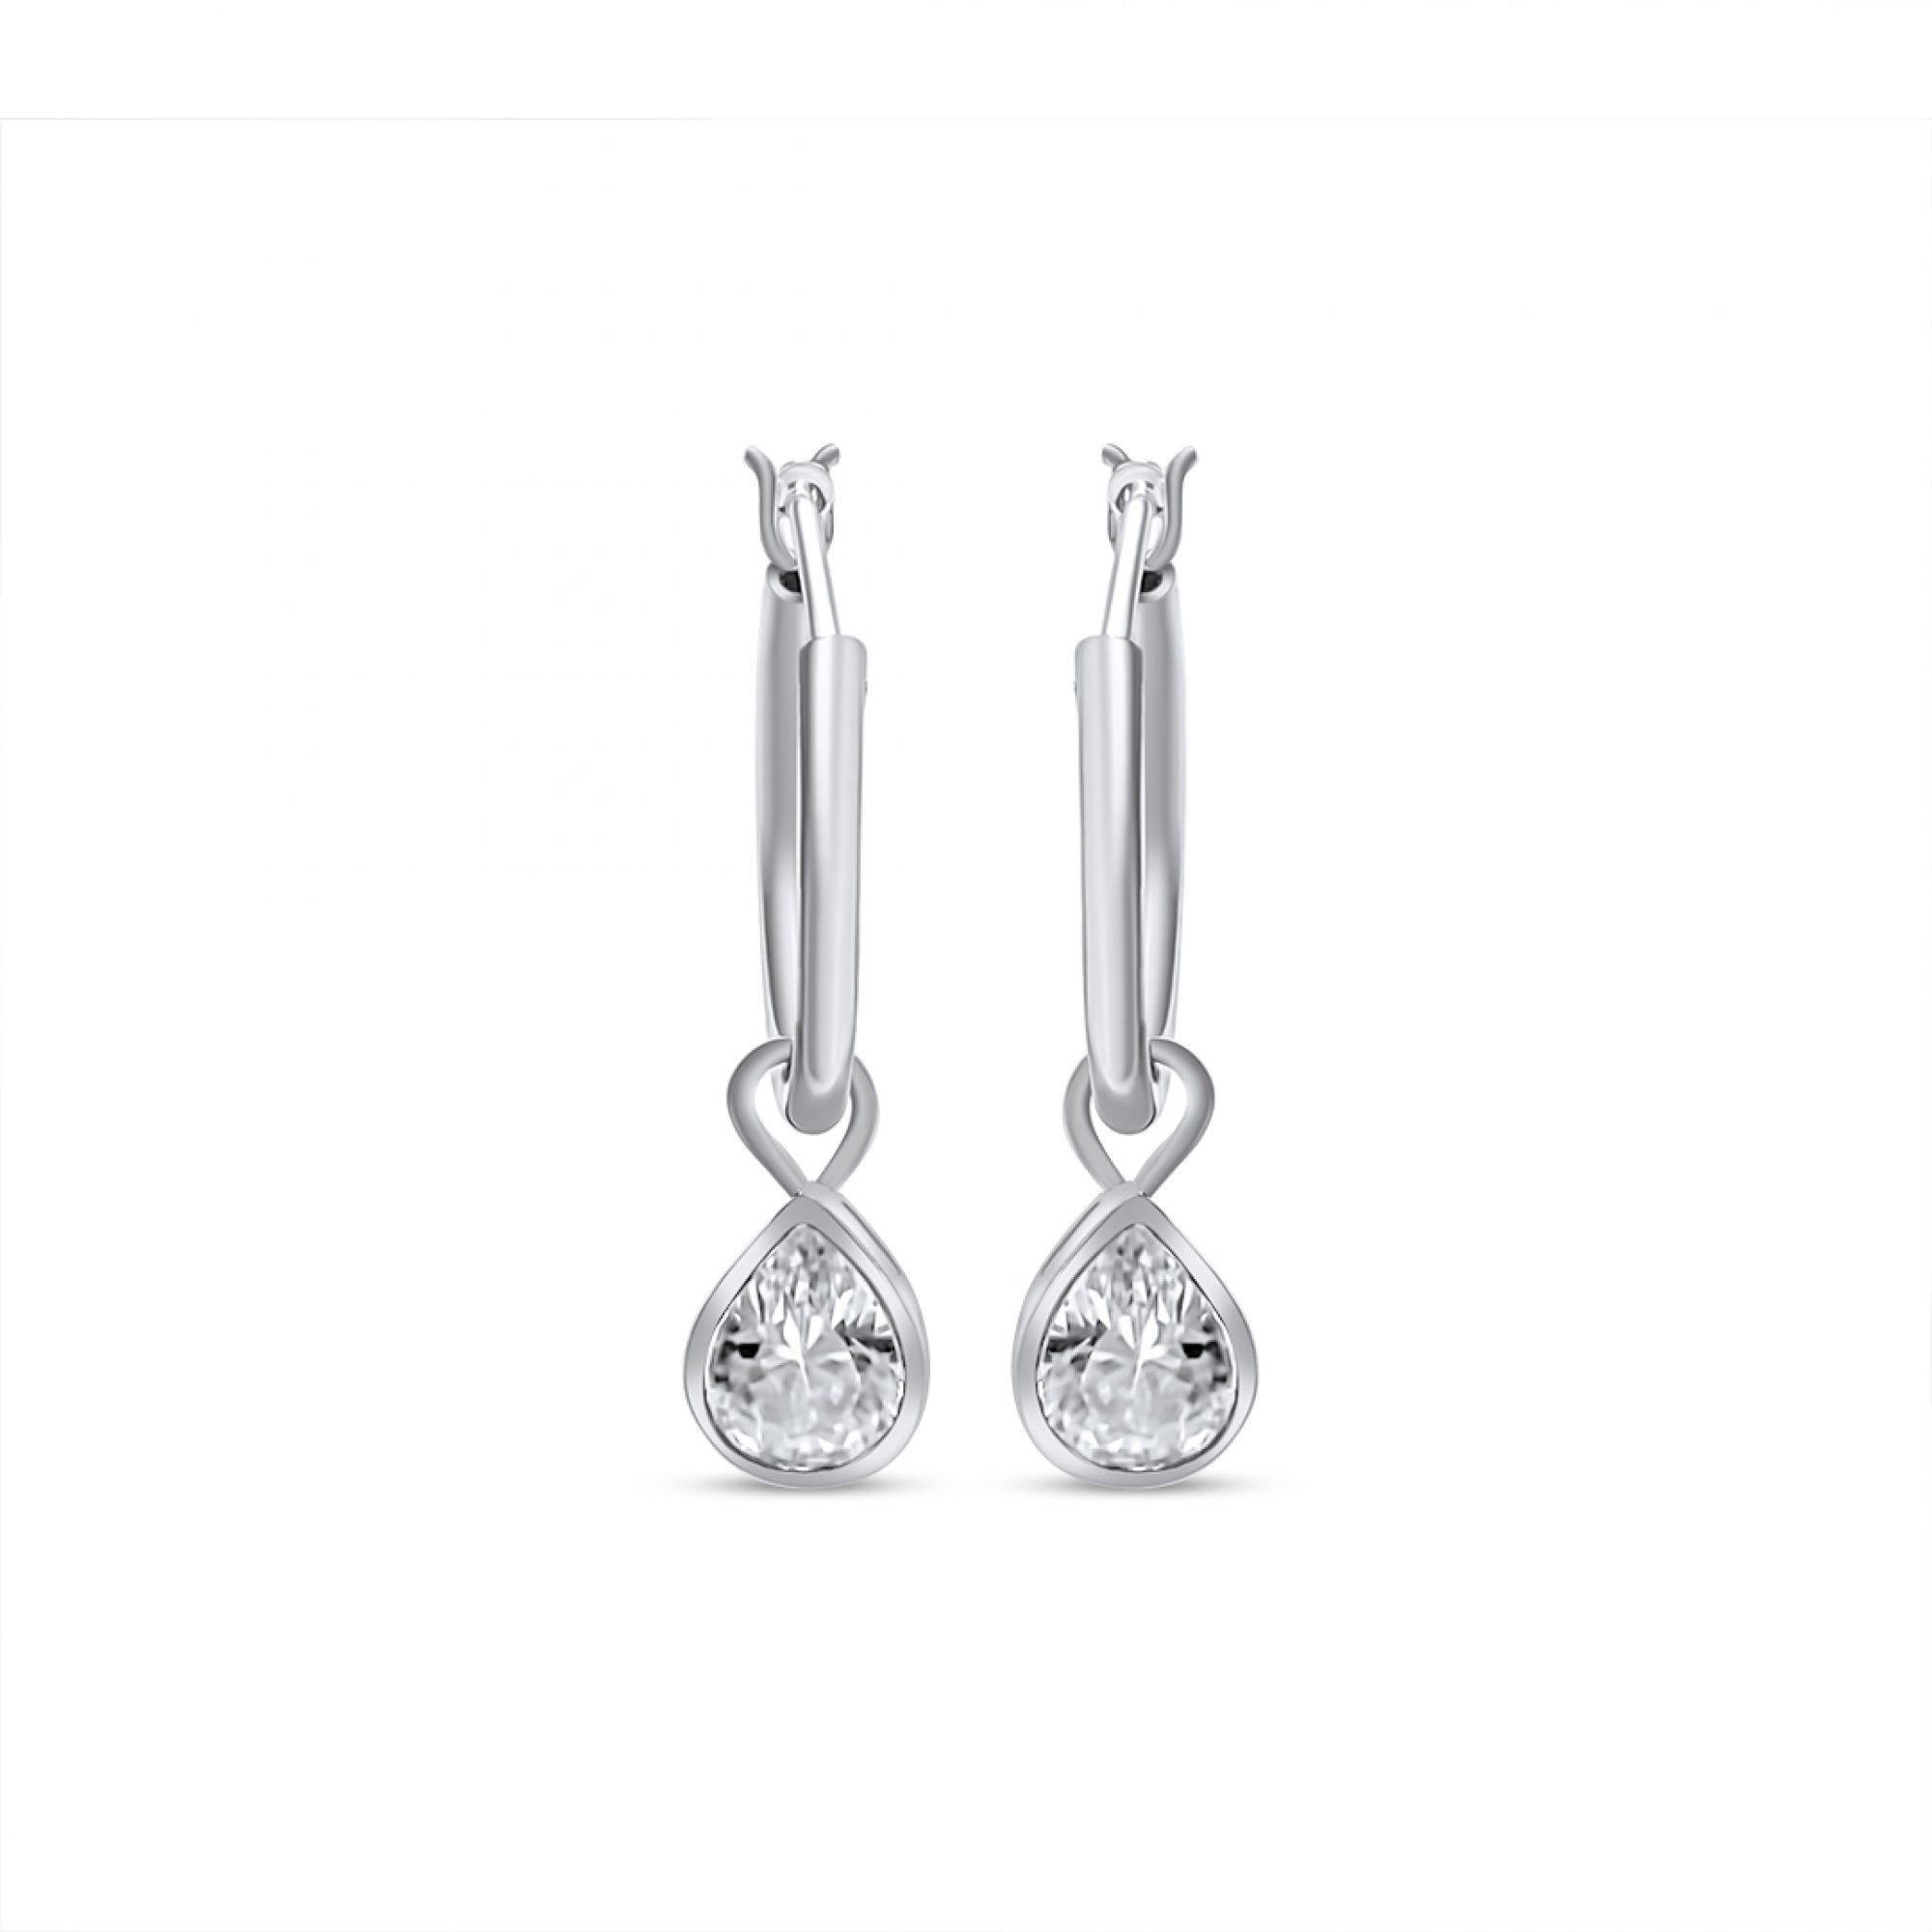 Silver earrings with amethyst stone